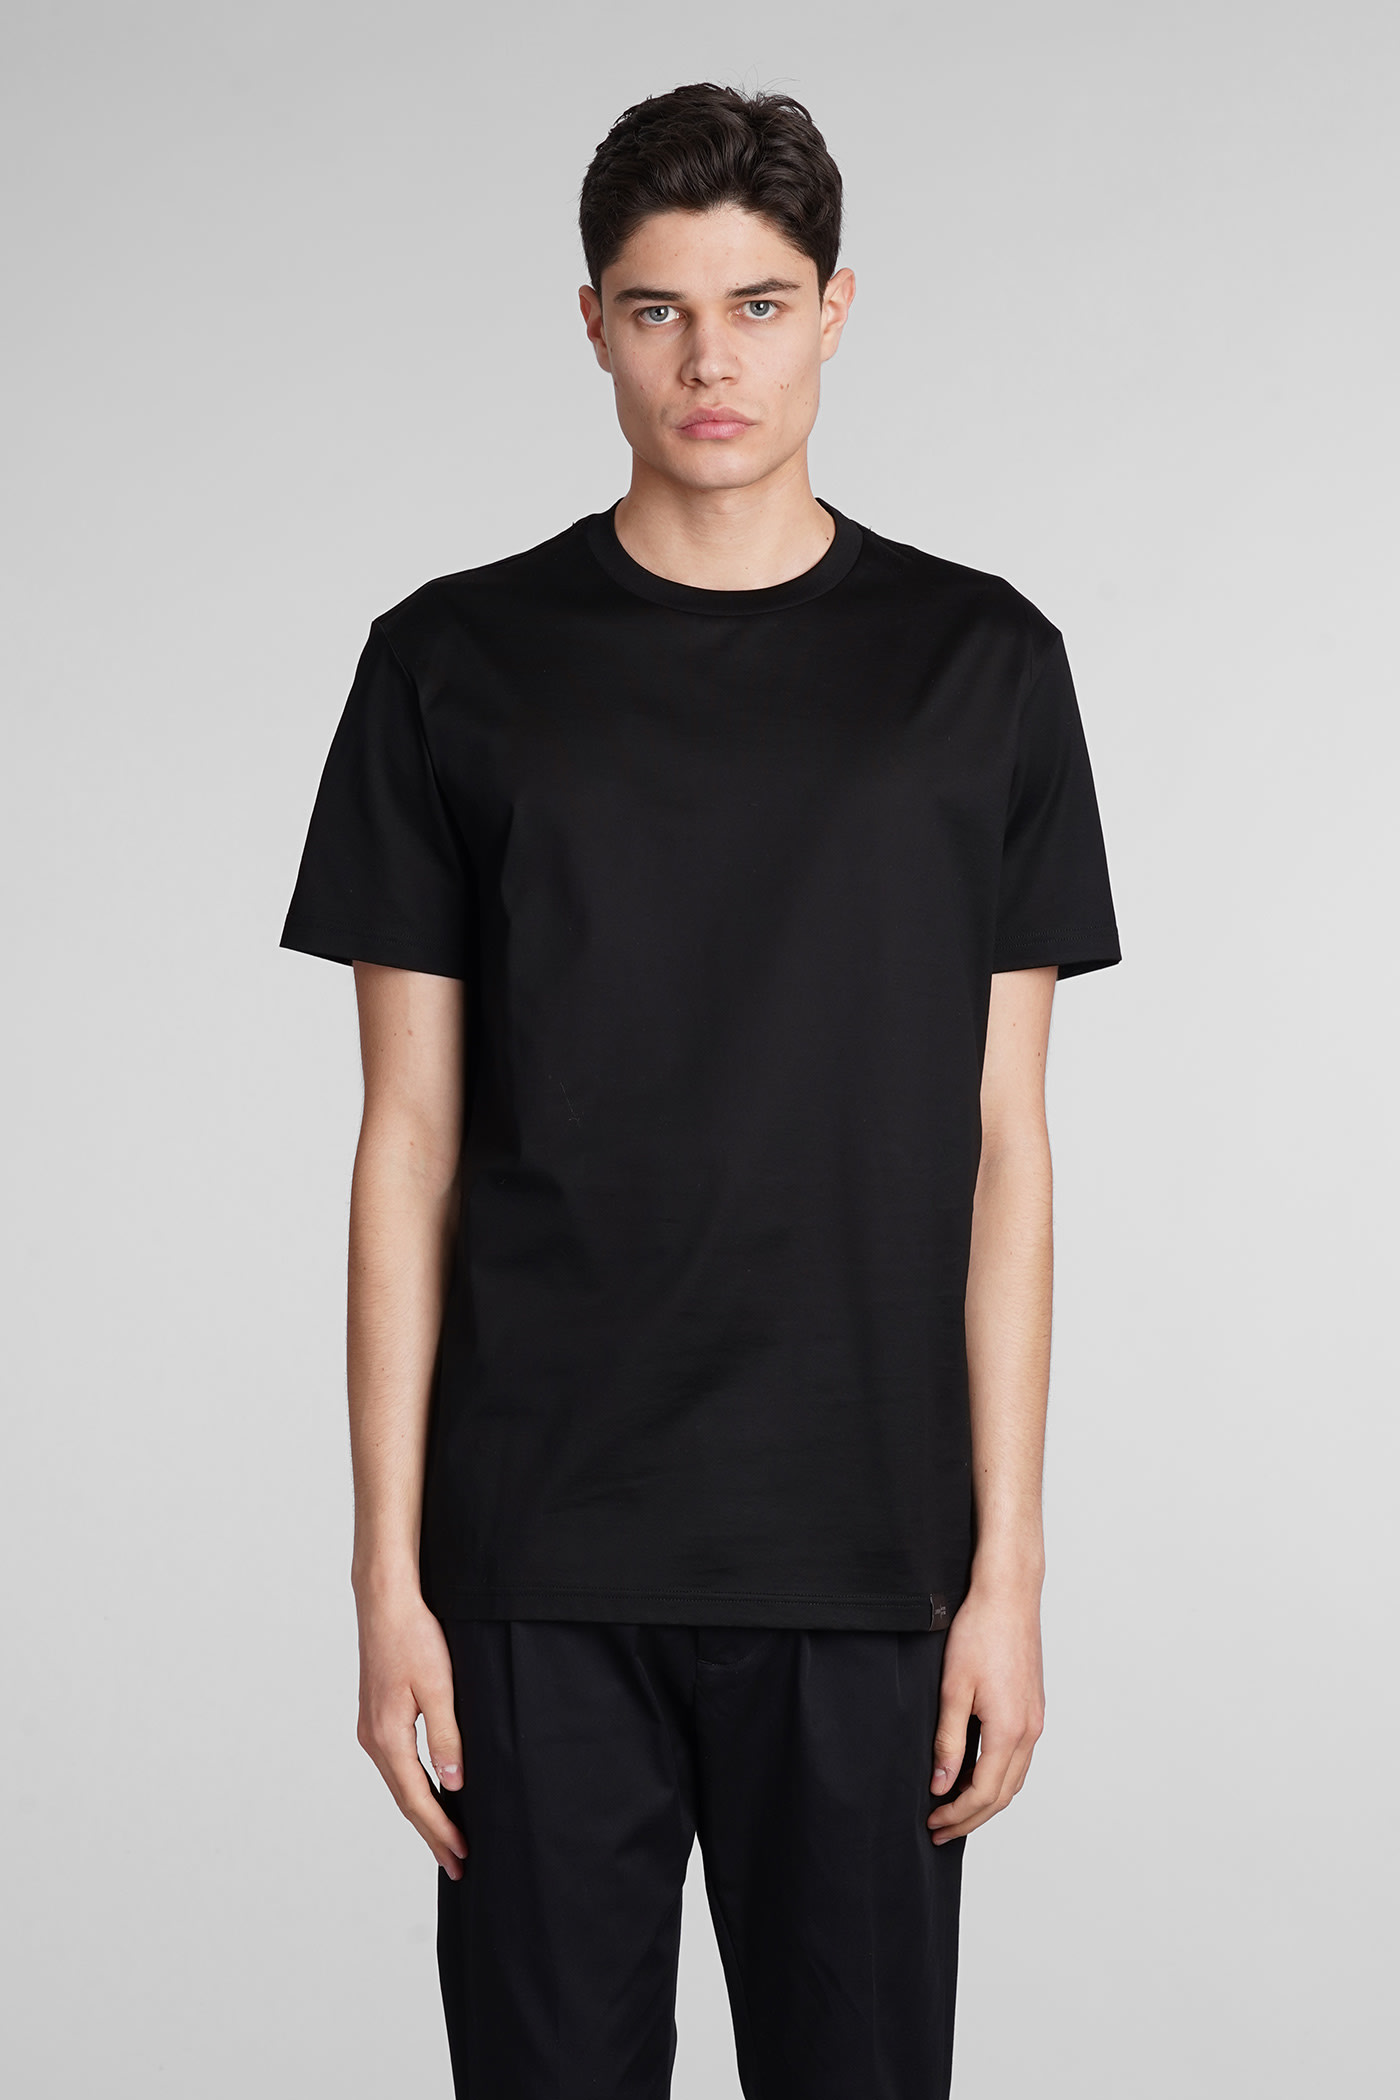 B134 Basic T-shirt In Black Cotton